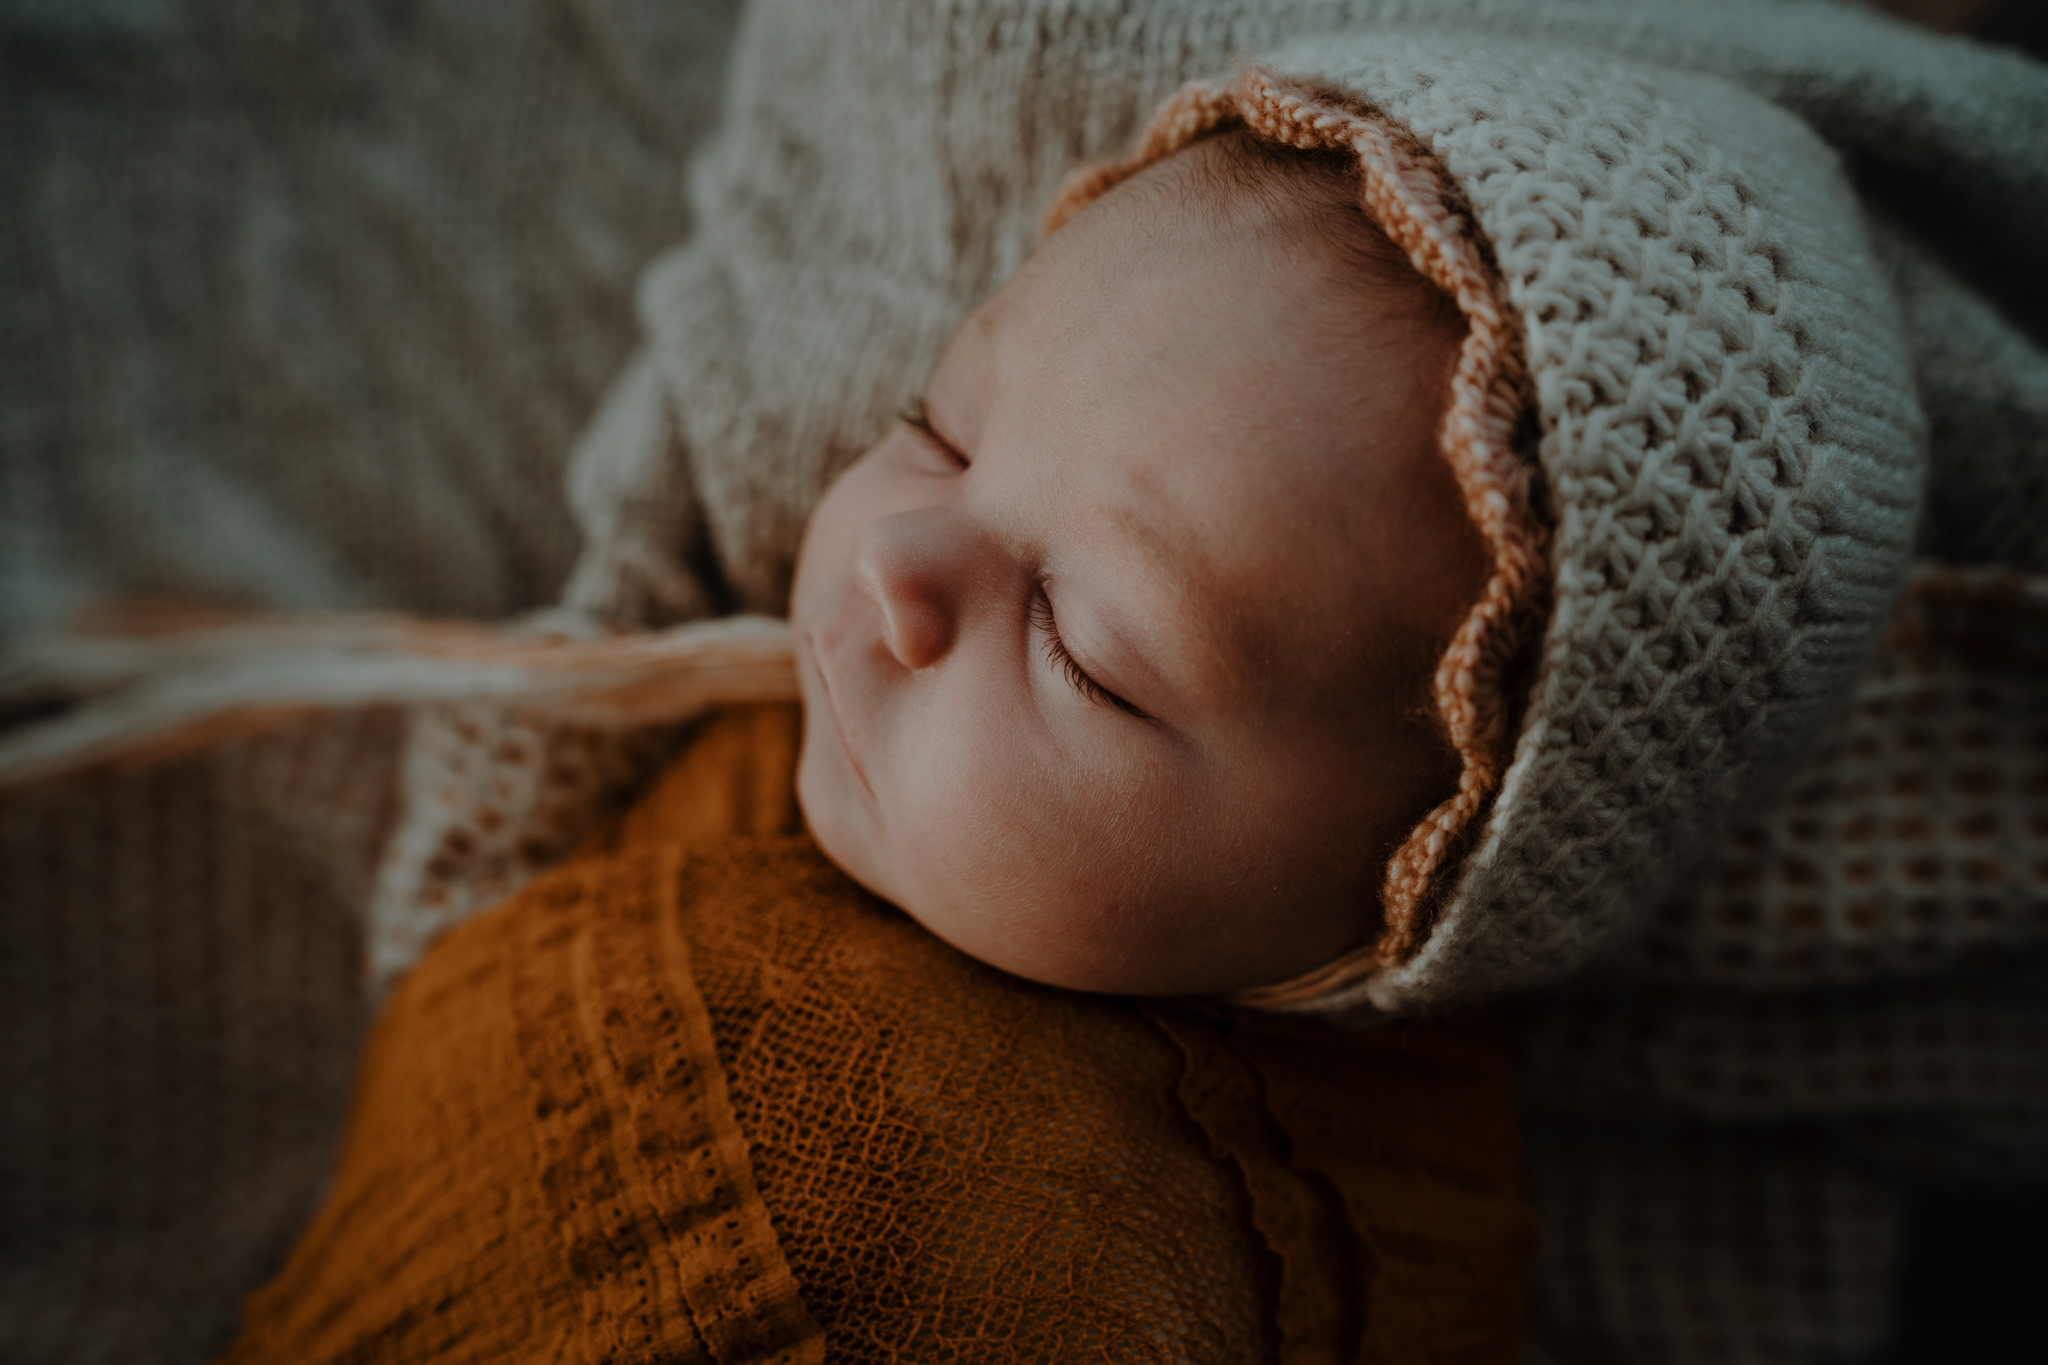 peach cream and rustic tones in home baby girl newborn photography Belfast